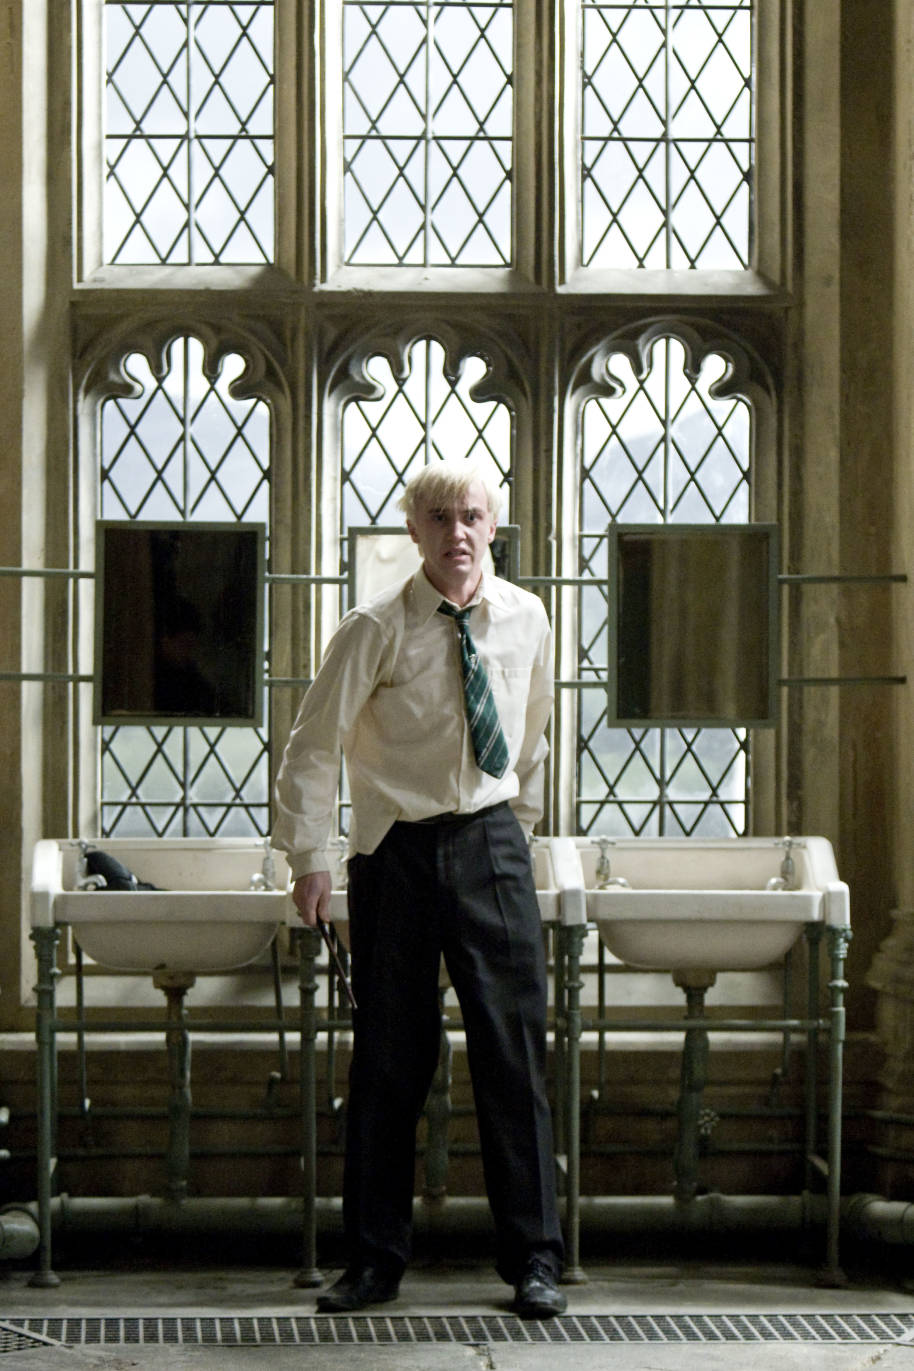 Draco Malfoy in Moaning Myrtle's bathroom